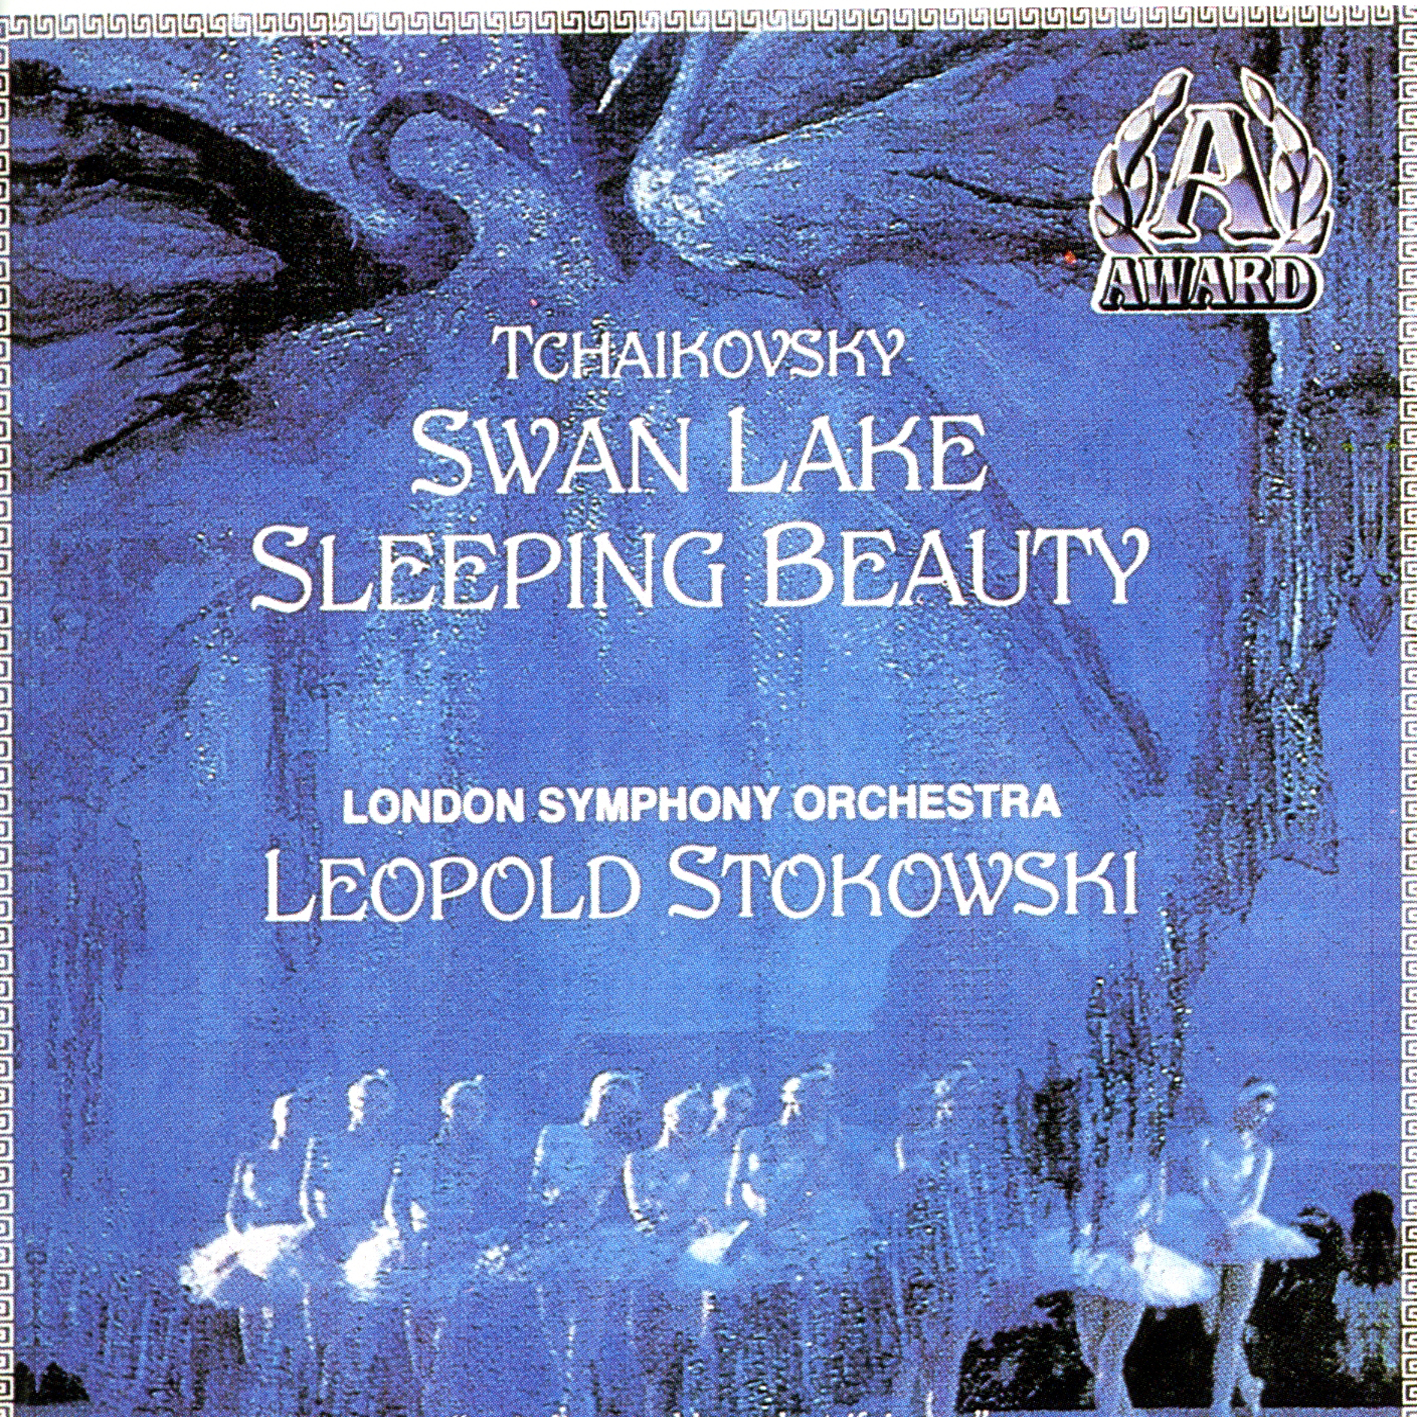 Tchaikovsky: Swan Lake, Sleeping Beauty Highlights